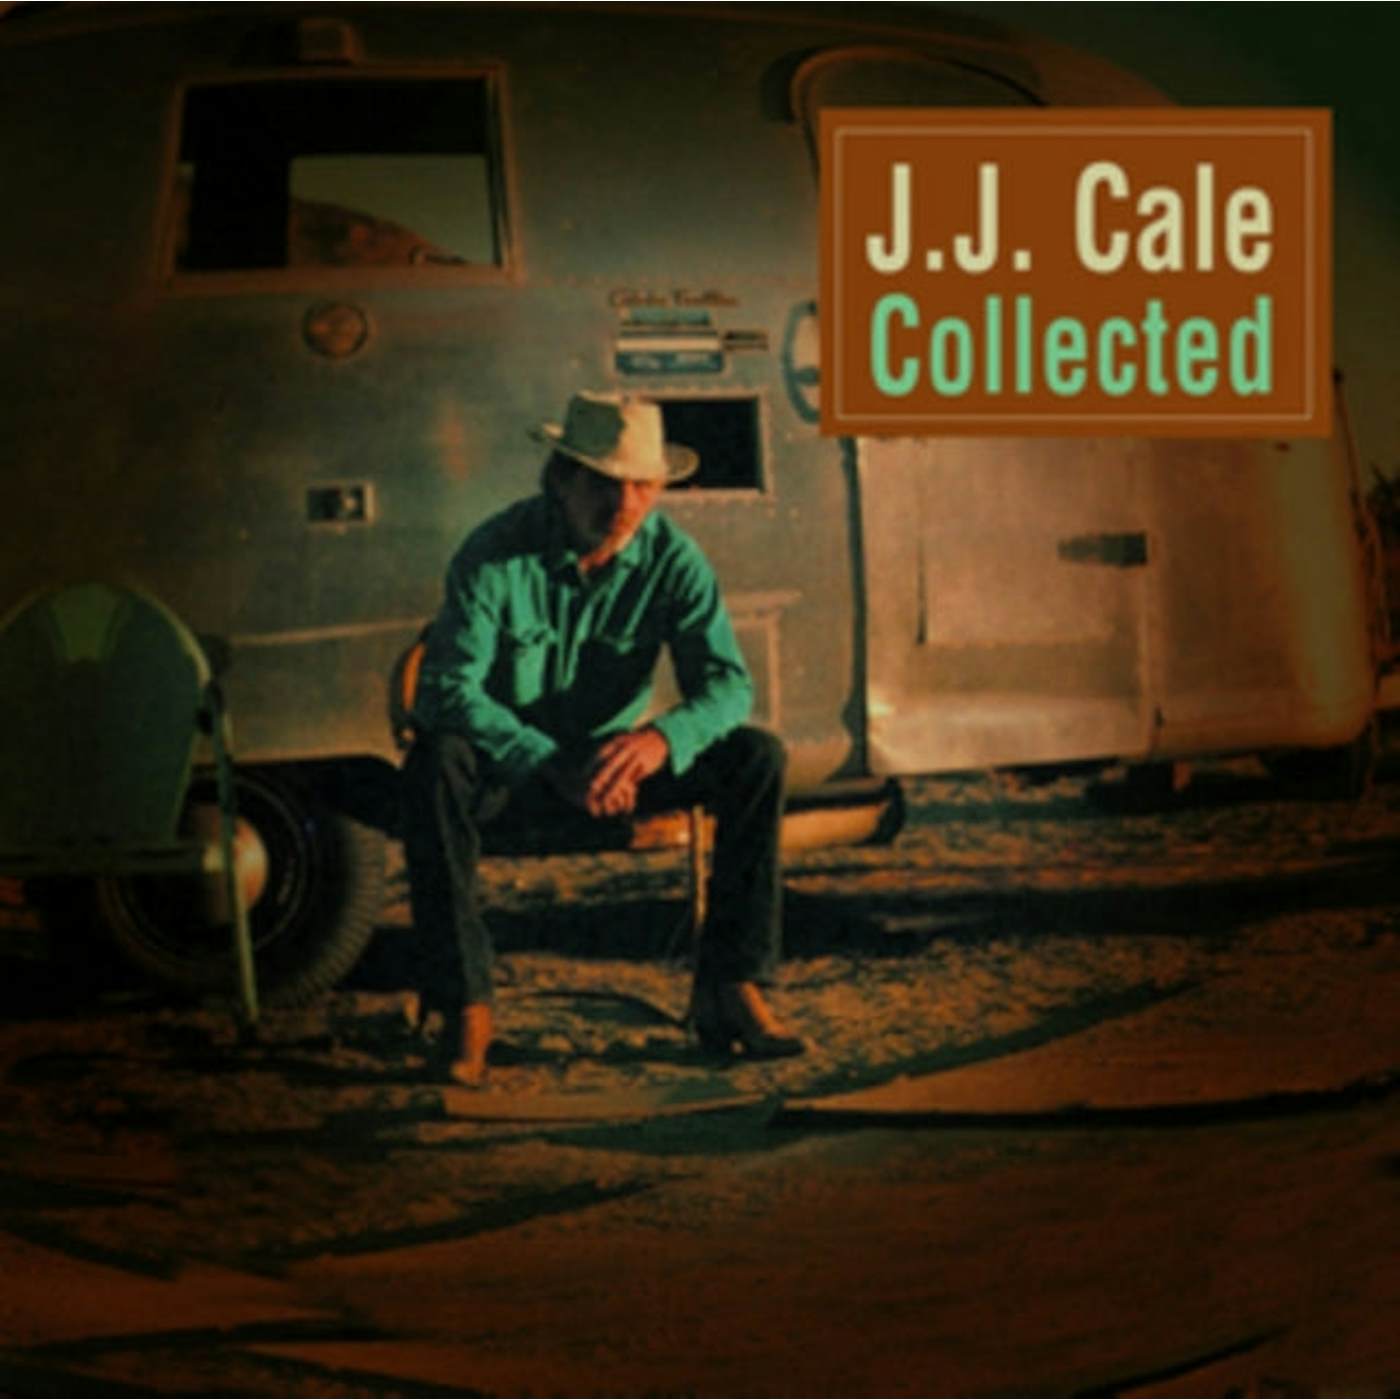 J.J. Cale LP Vinyl Record - Collected